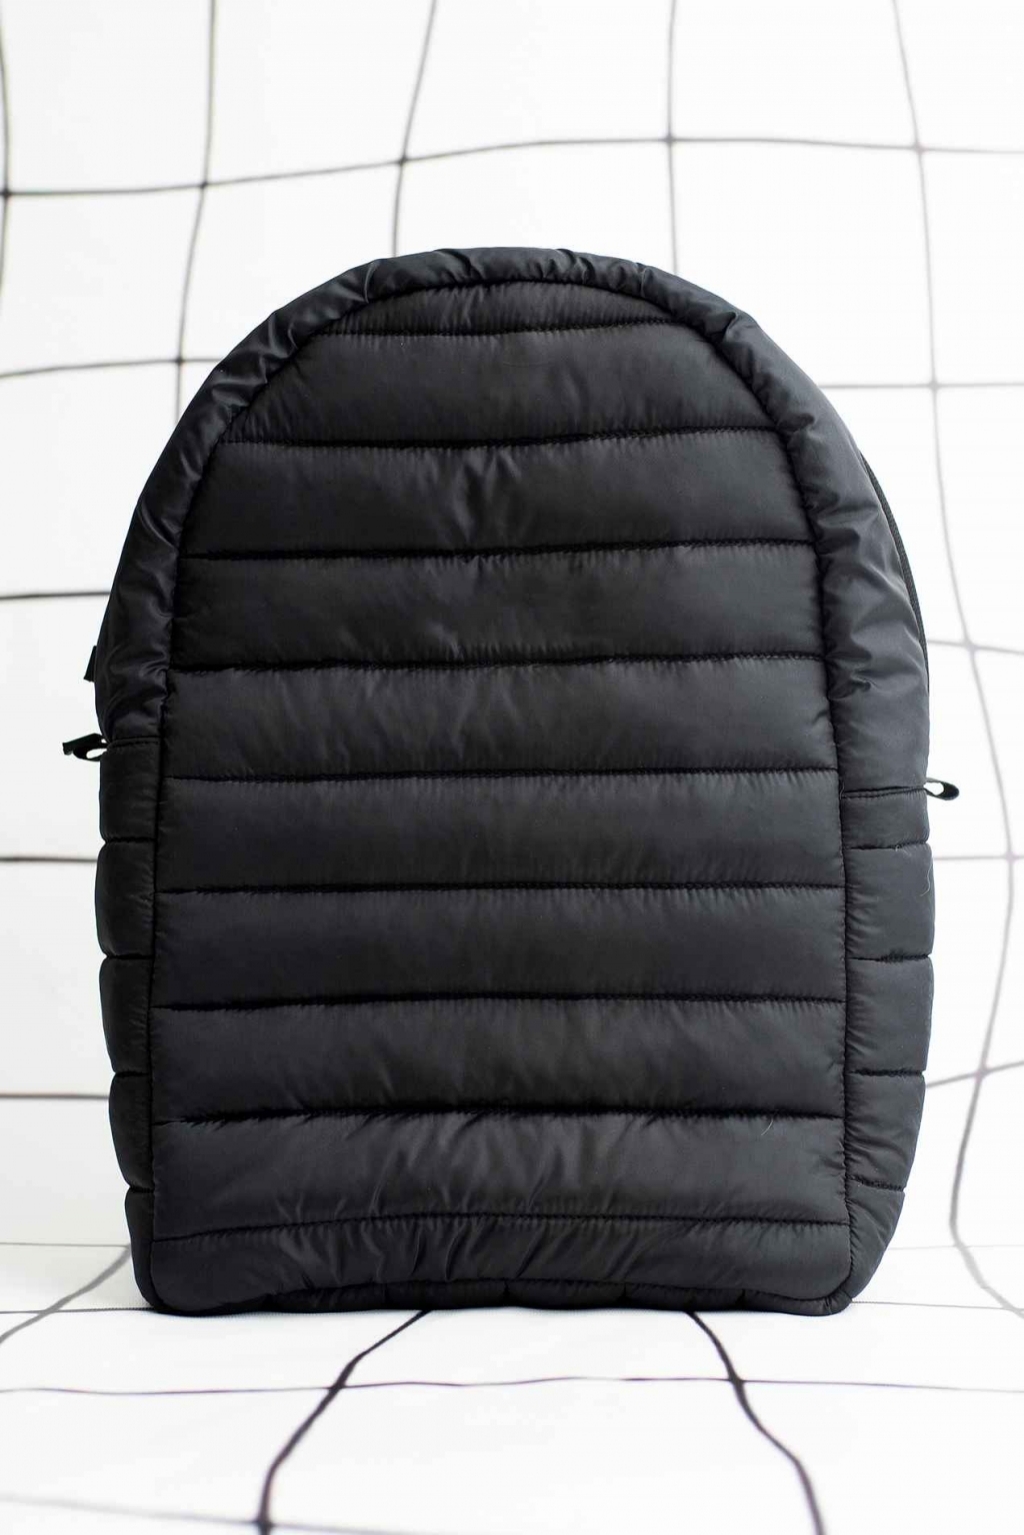 16667968540_Boys-Black-Puffer-backpack-by-OFFBEAT-04.jpg